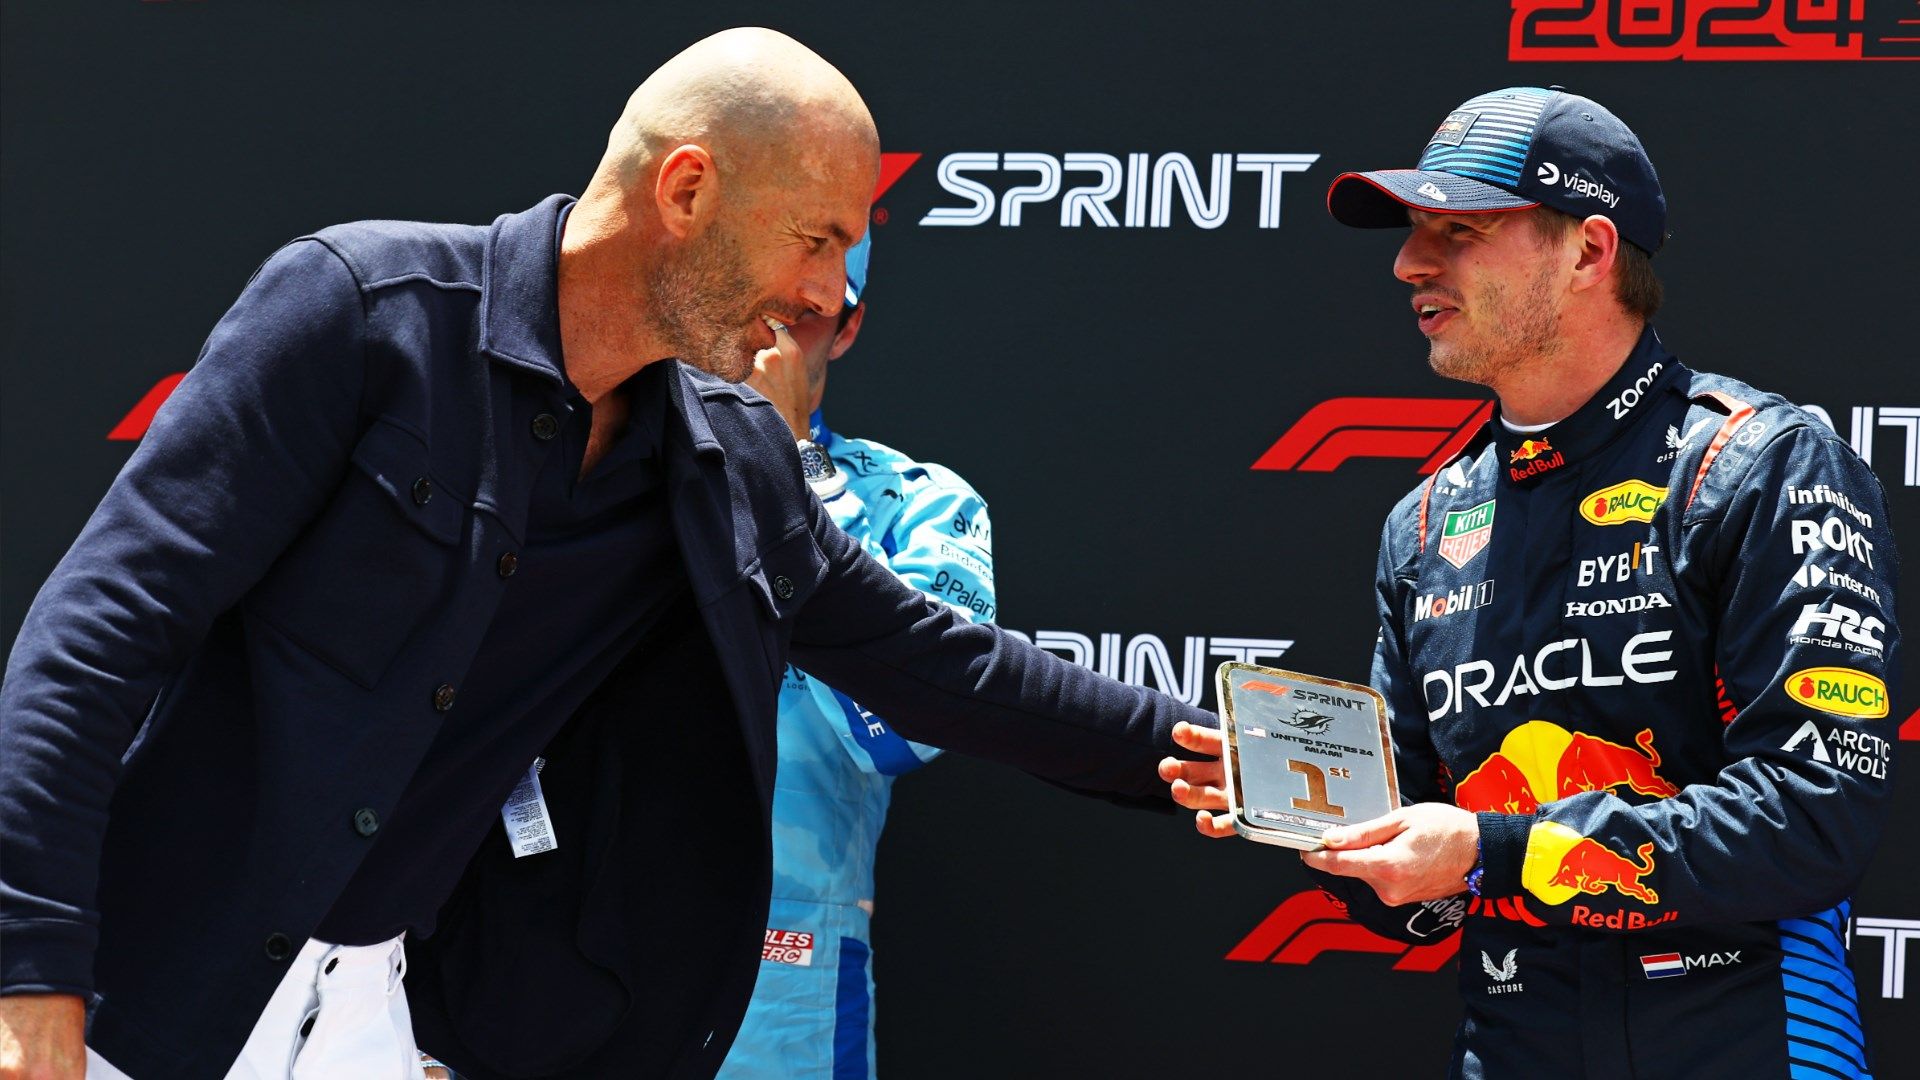 Legenda Real Madrid Zinedine Zidane Beri Penghargaan Buat Superstar Formula One Max Verstappen Di GP Miami